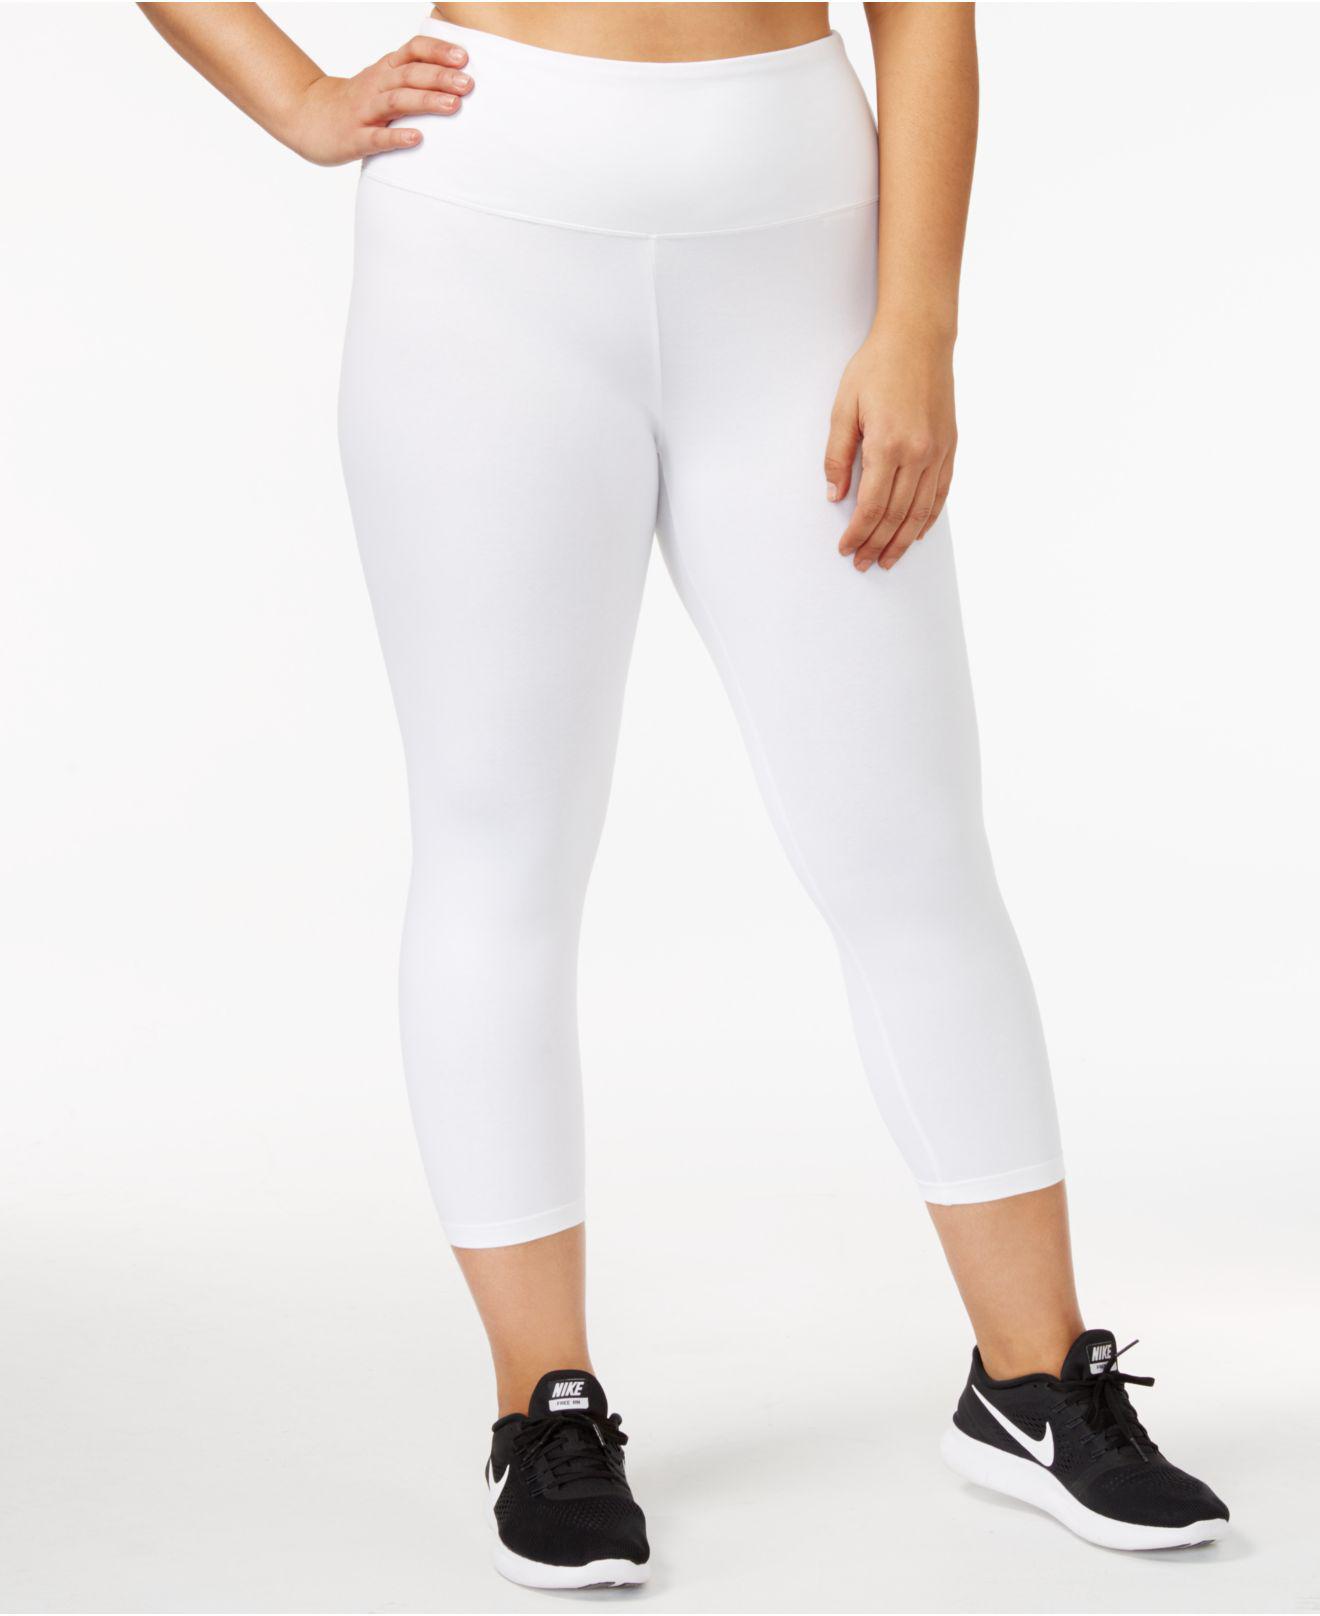 white yoga pants plus size